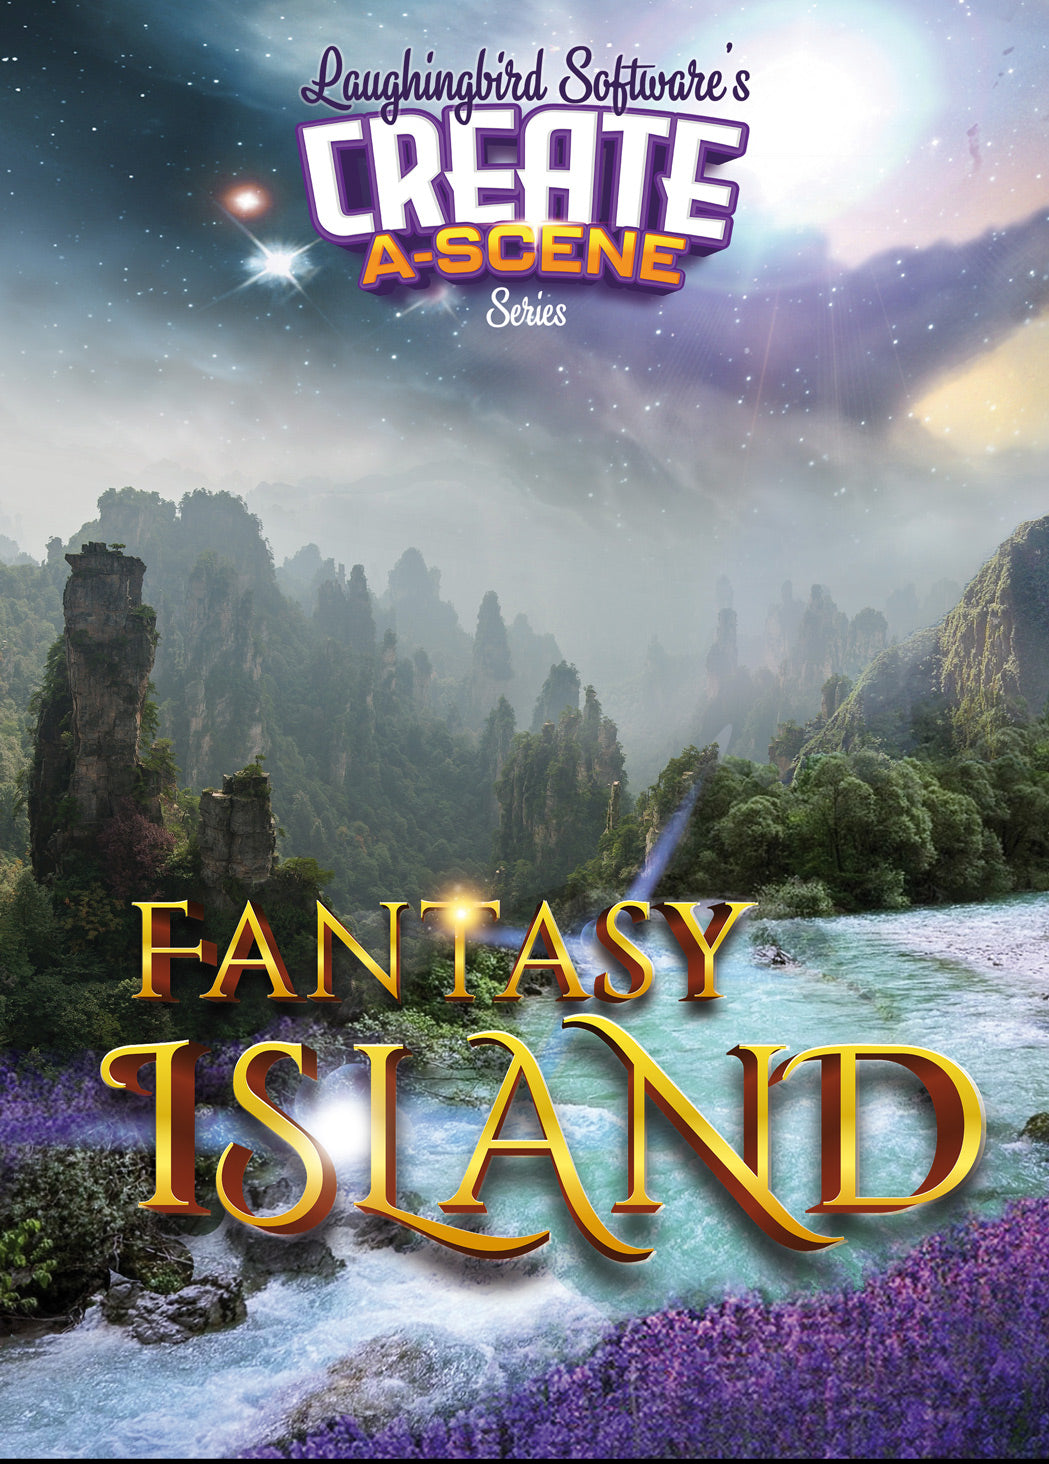 Create-A-Scene Fantasy Island